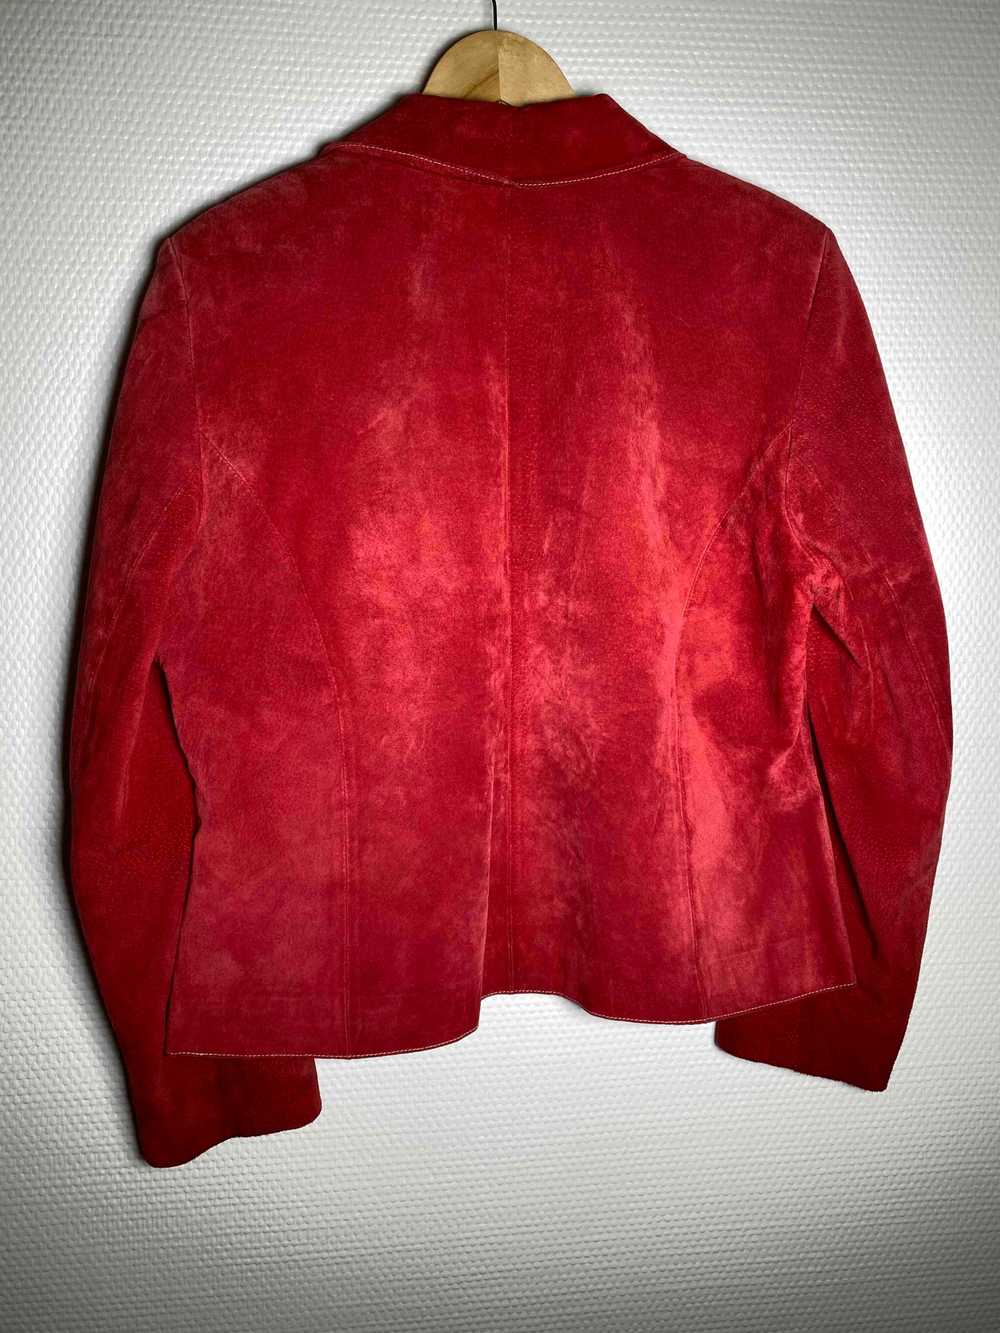 Suede jacket - Red suede jacket (100% pork rind),… - image 5